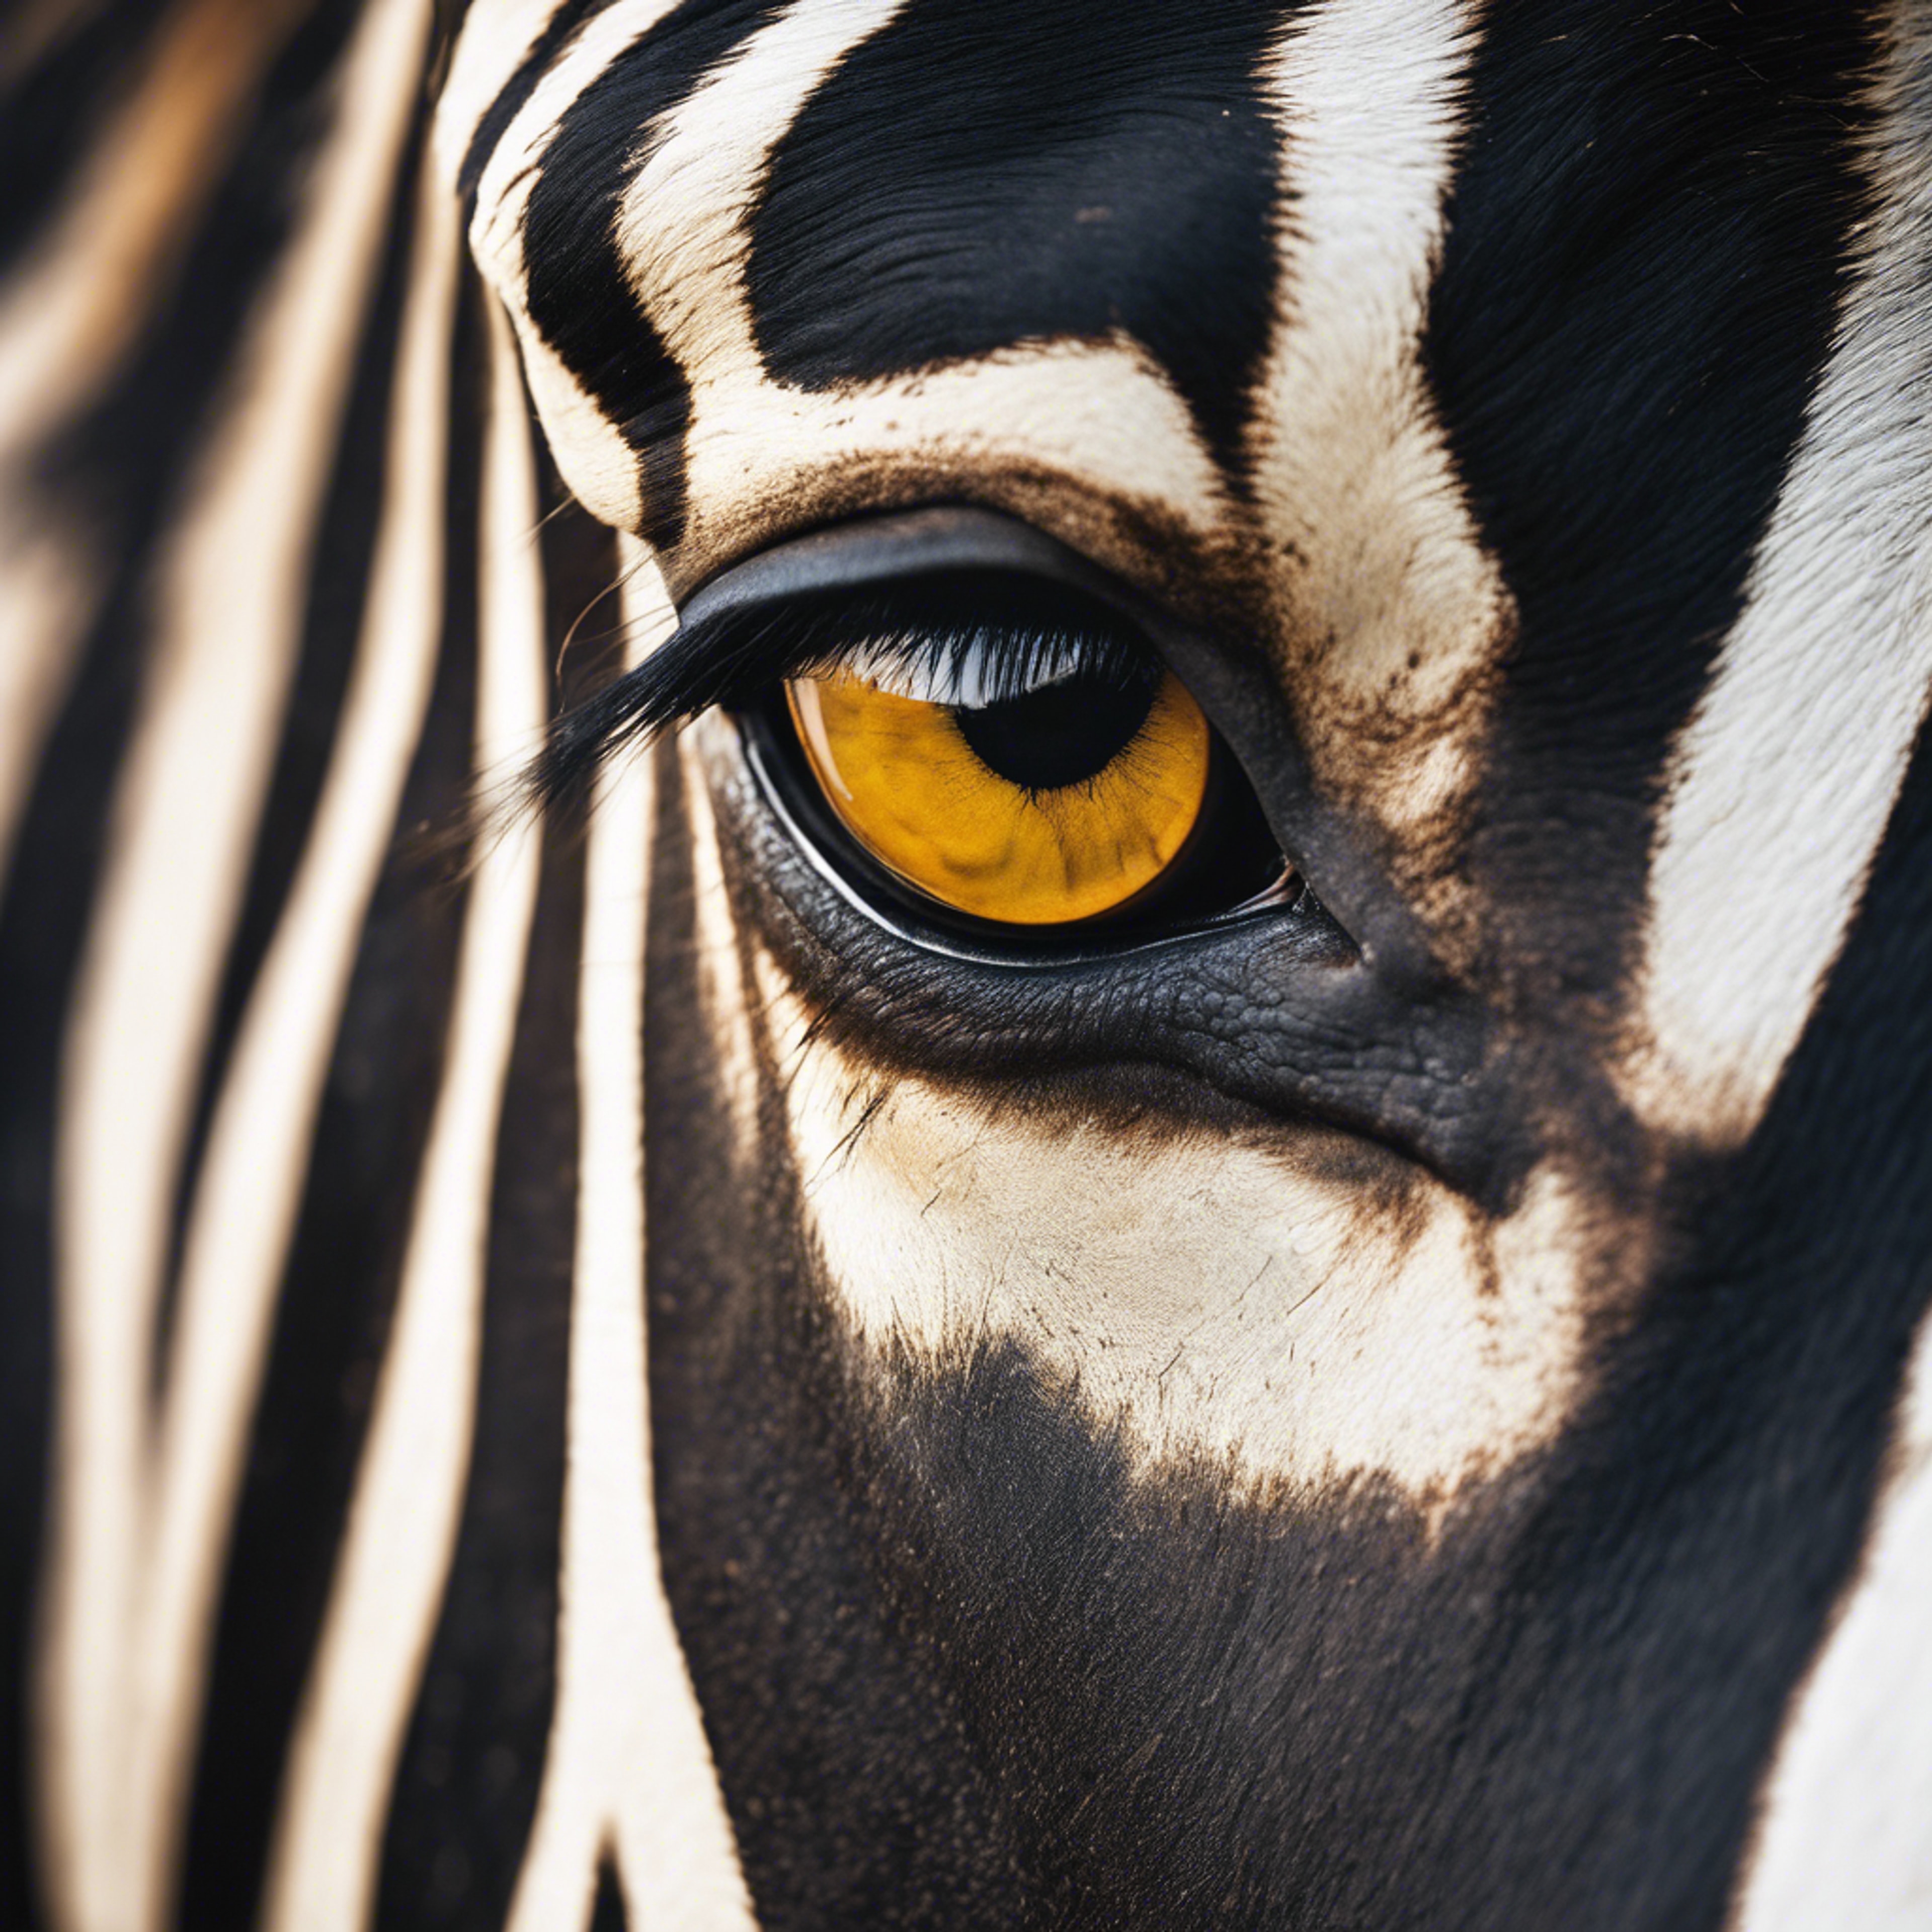 A closeup of a zebra's eye, showcasing its beautiful black and yellow striped pattern. Divar kağızı[50ee4a2668b0446d82c3]